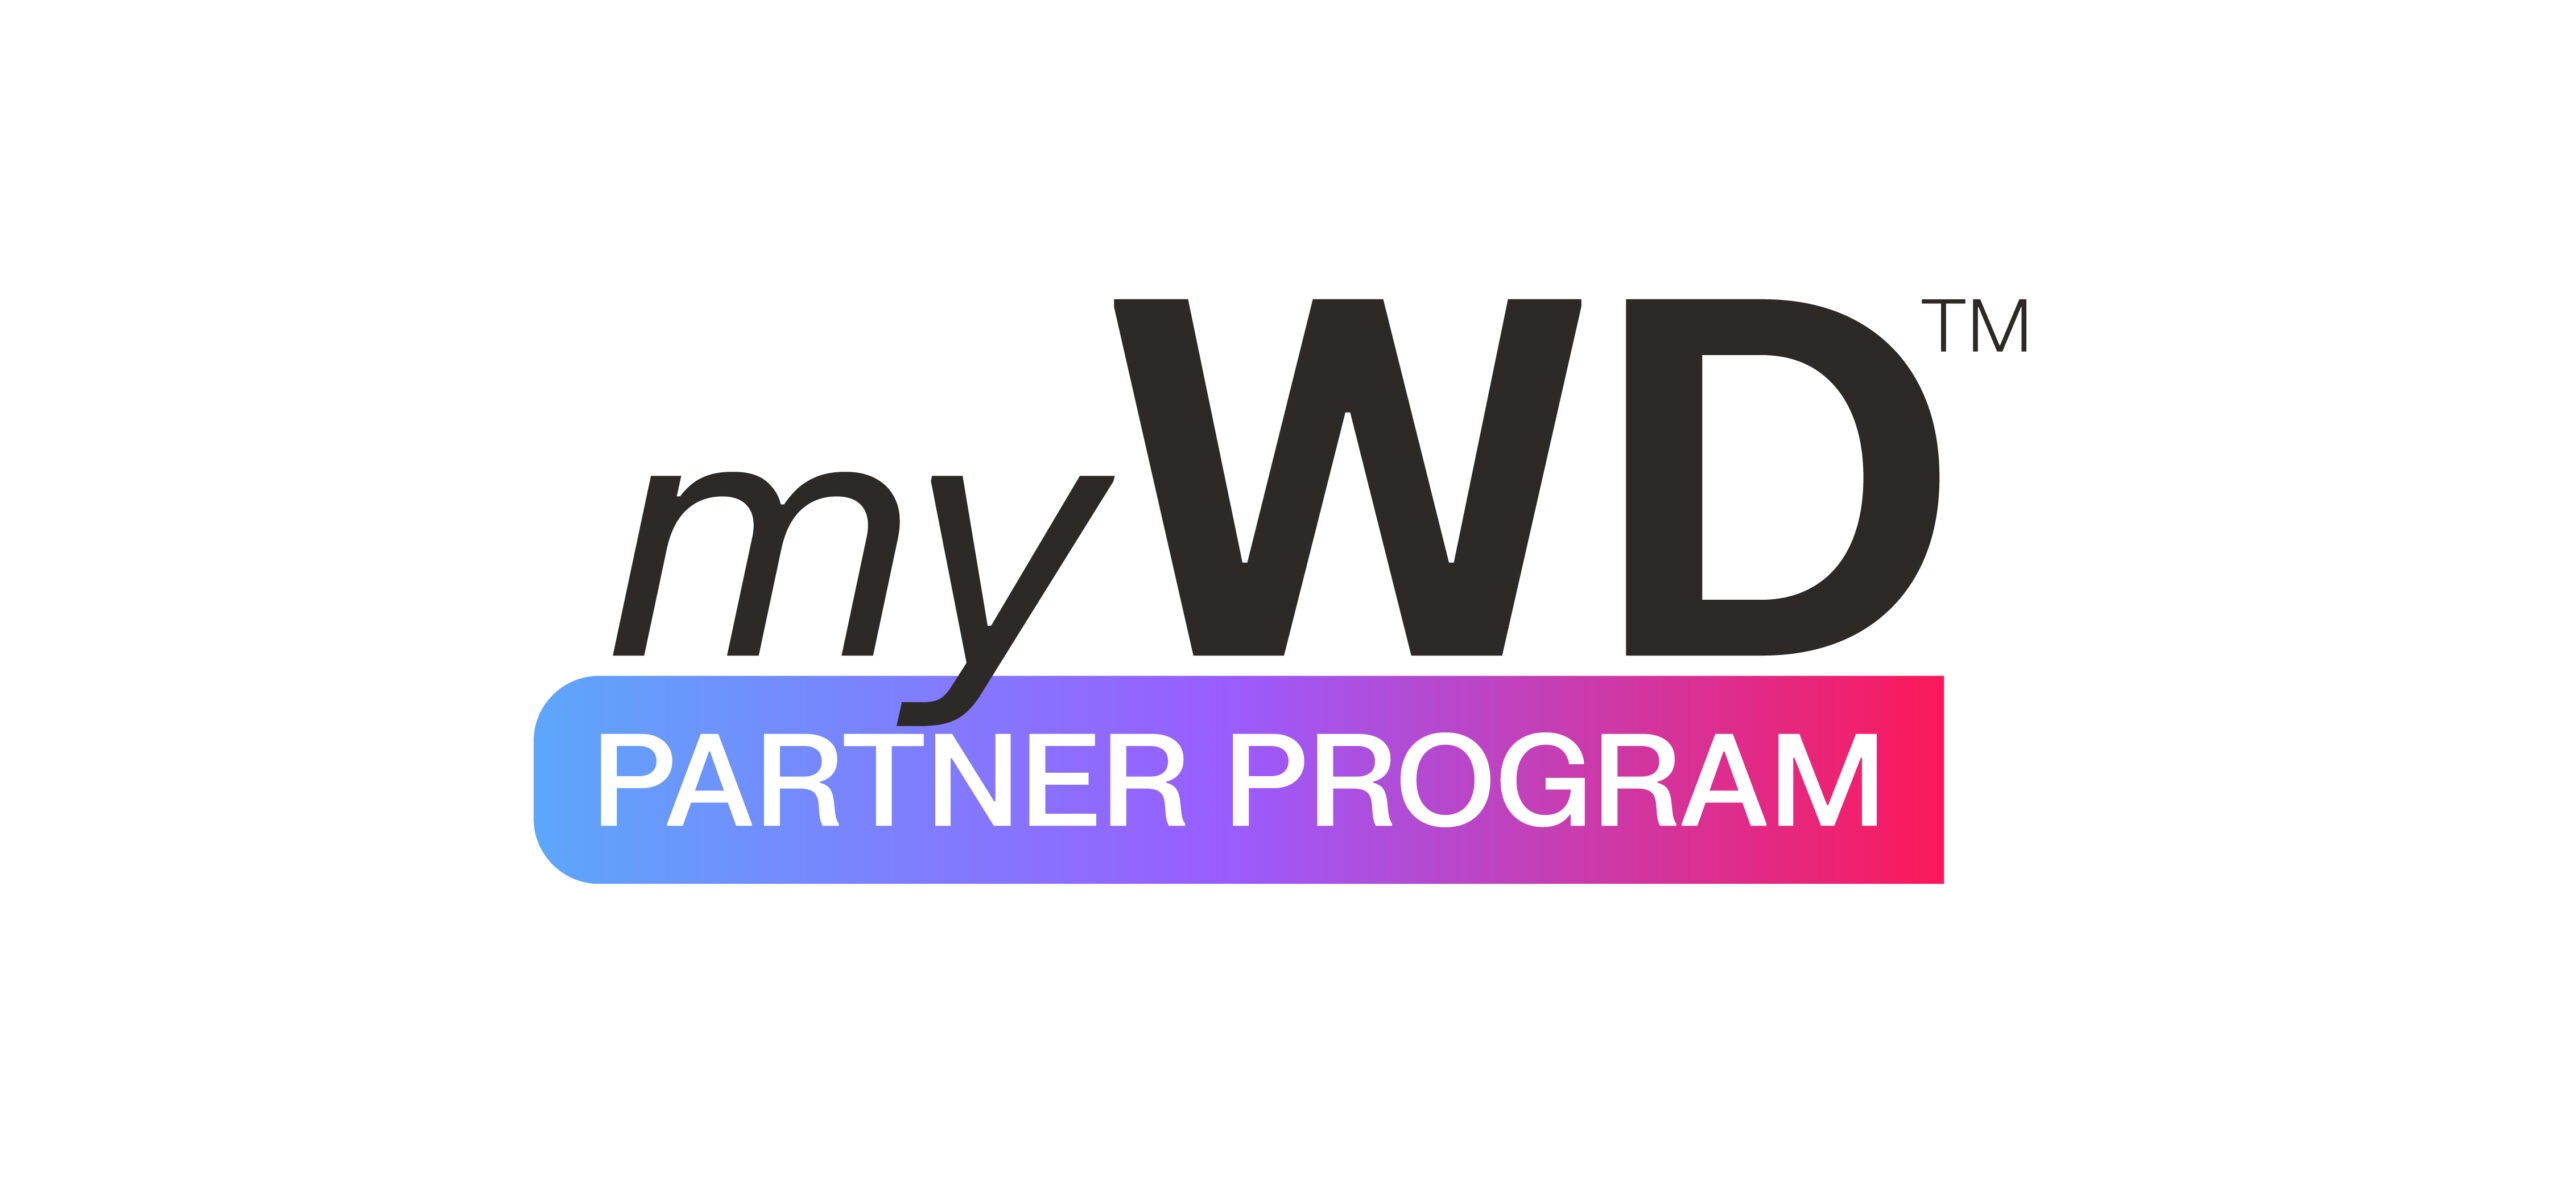 Join the Western Digital myWD™ Partner Program